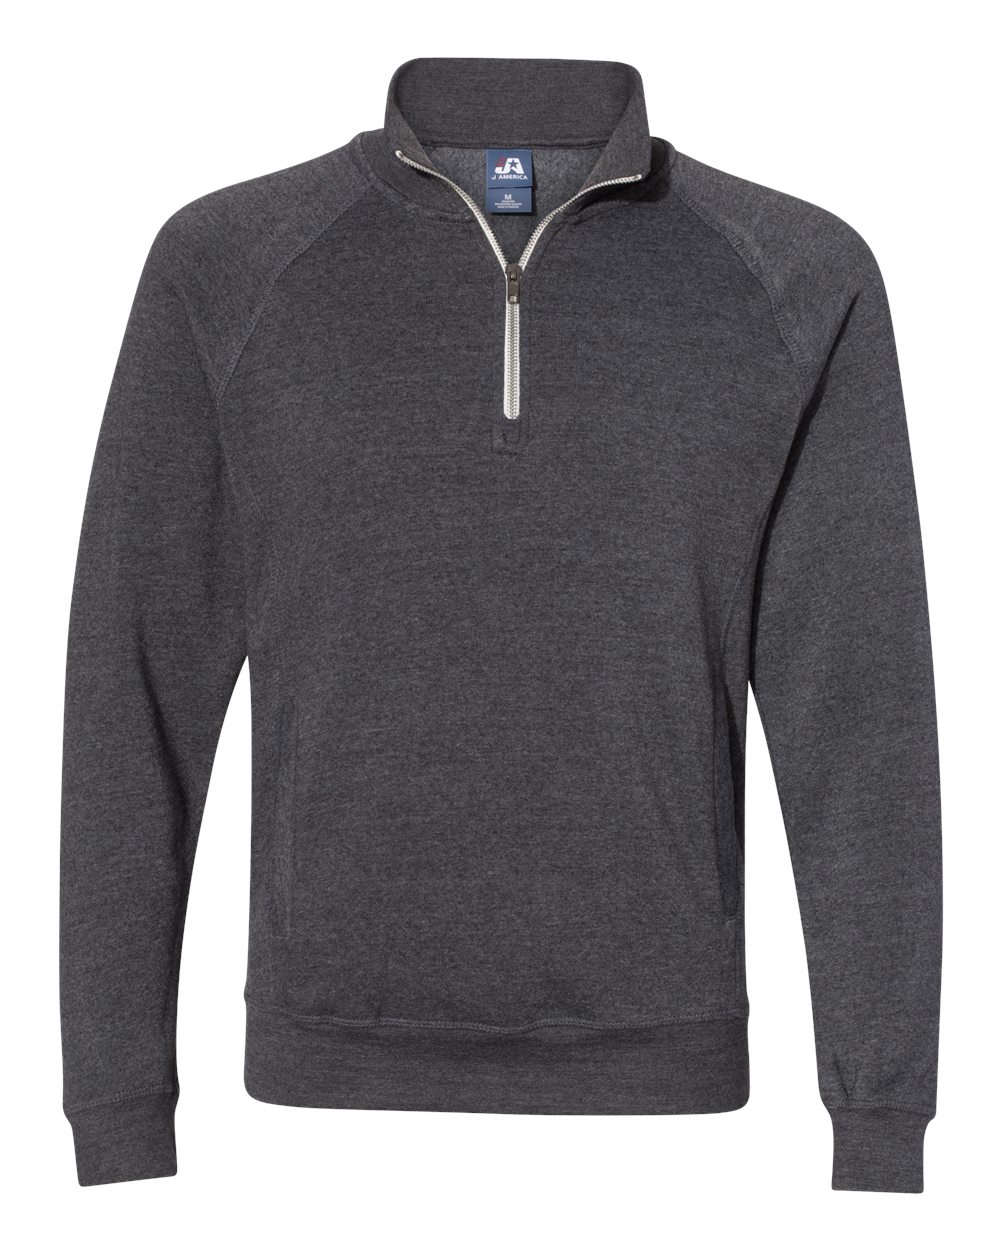 J. America 8869 - Triblend 1/4 Zip Pullover Sweatshirt